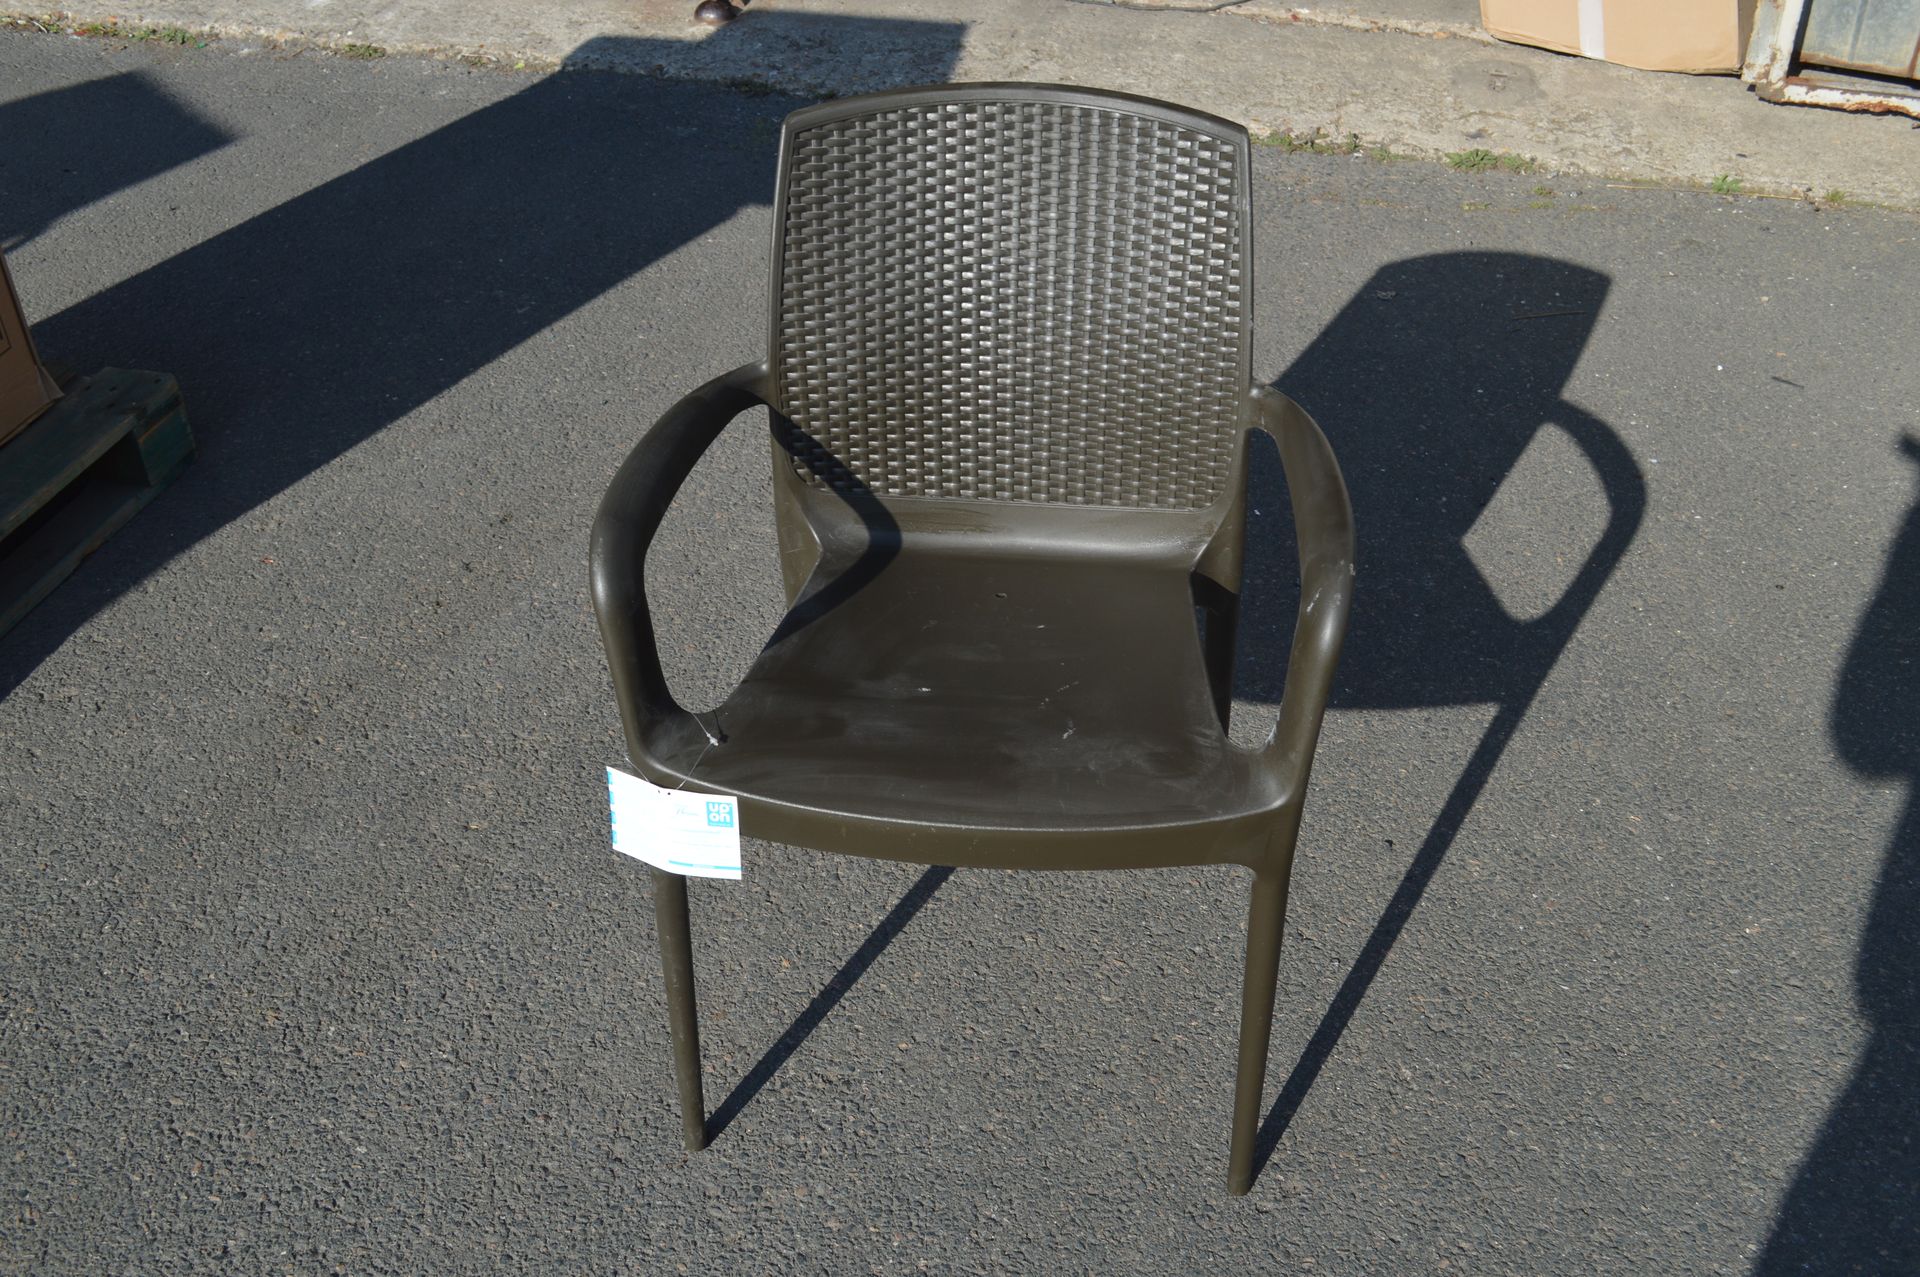 Null A brown PVC chair. Model POLTRONA OM MOKA. Dimensions: 59 x 55 x 84. Weight&hellip;